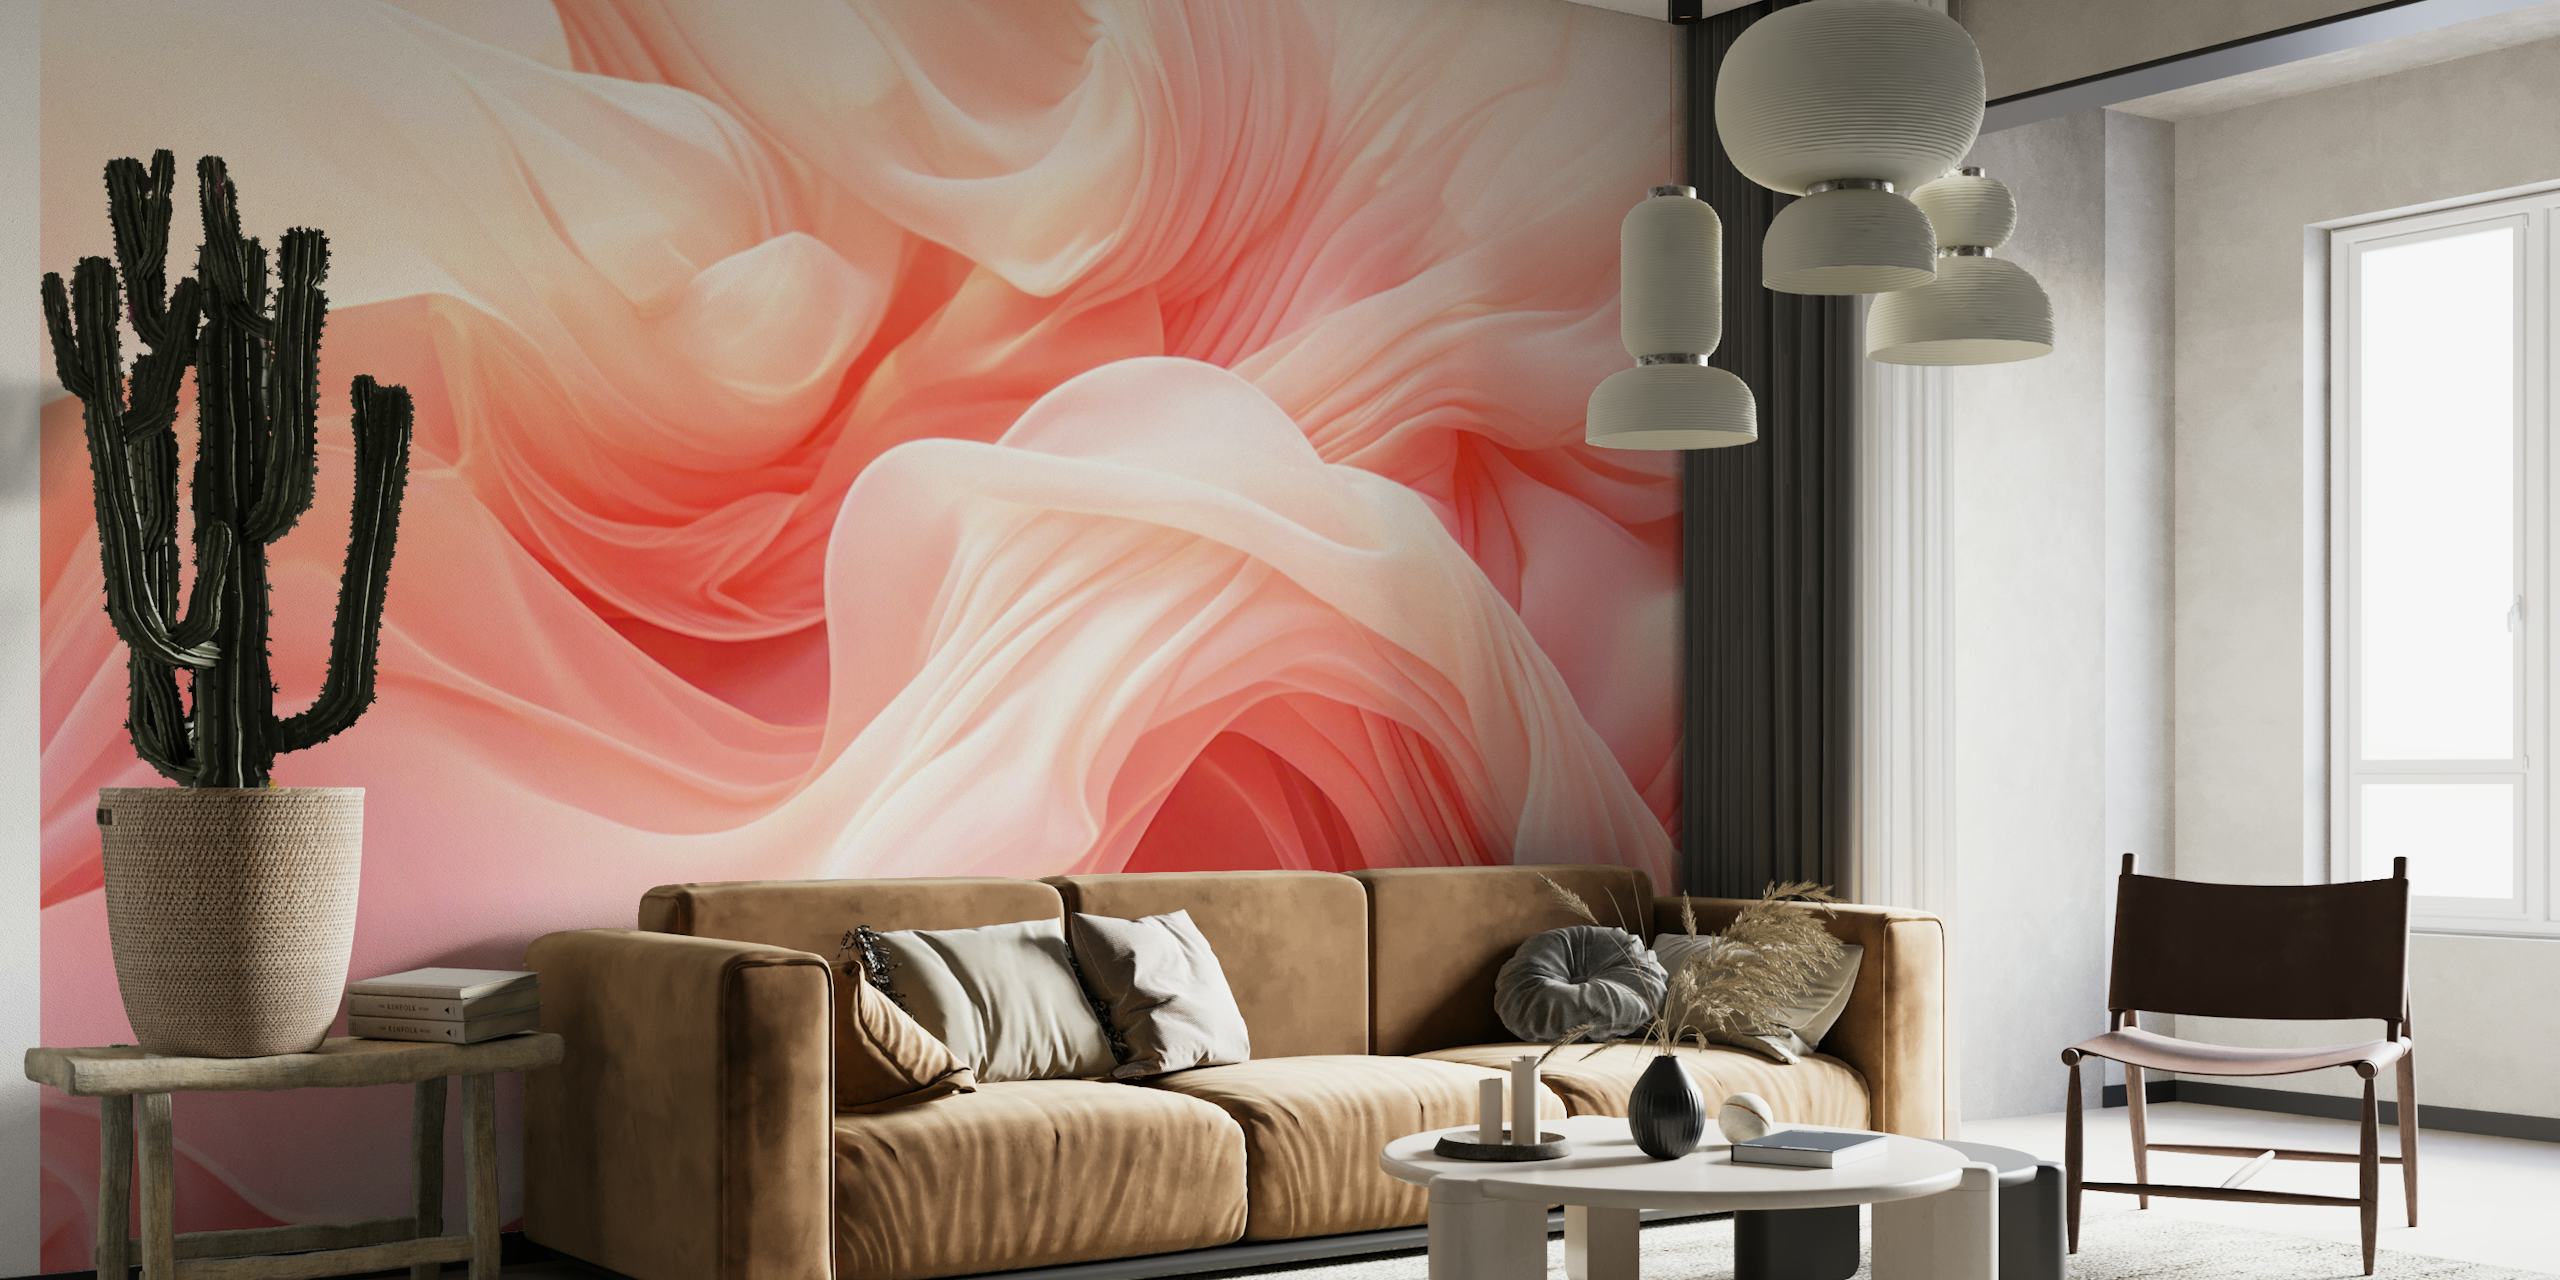 Ethereal Soft Peach Fluid Dreams wallpaper